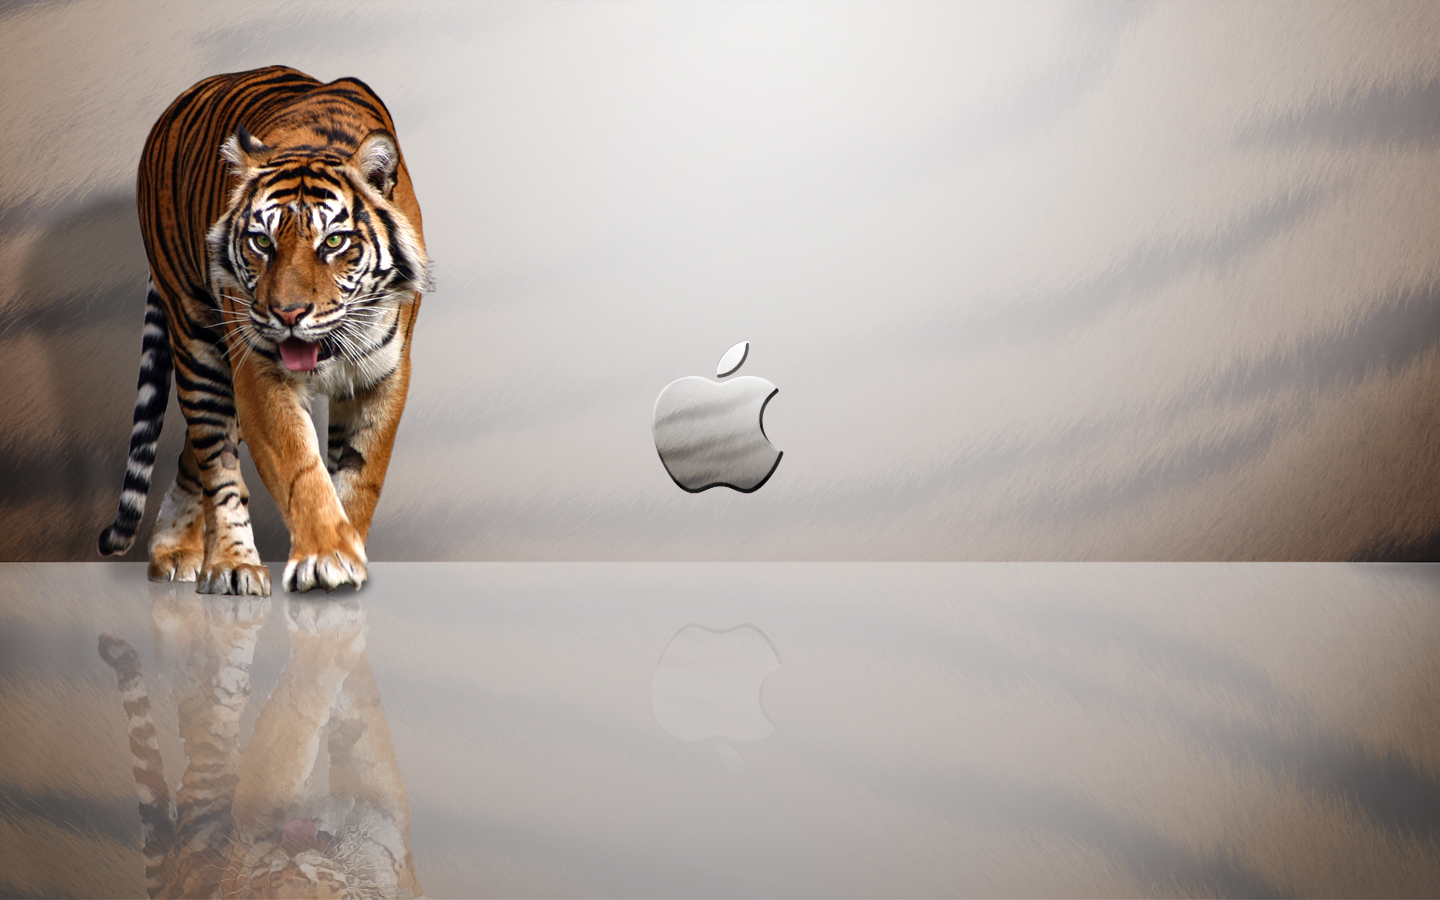  backgrounds for mac desktop backgrounds mac Desktop Backgrounds